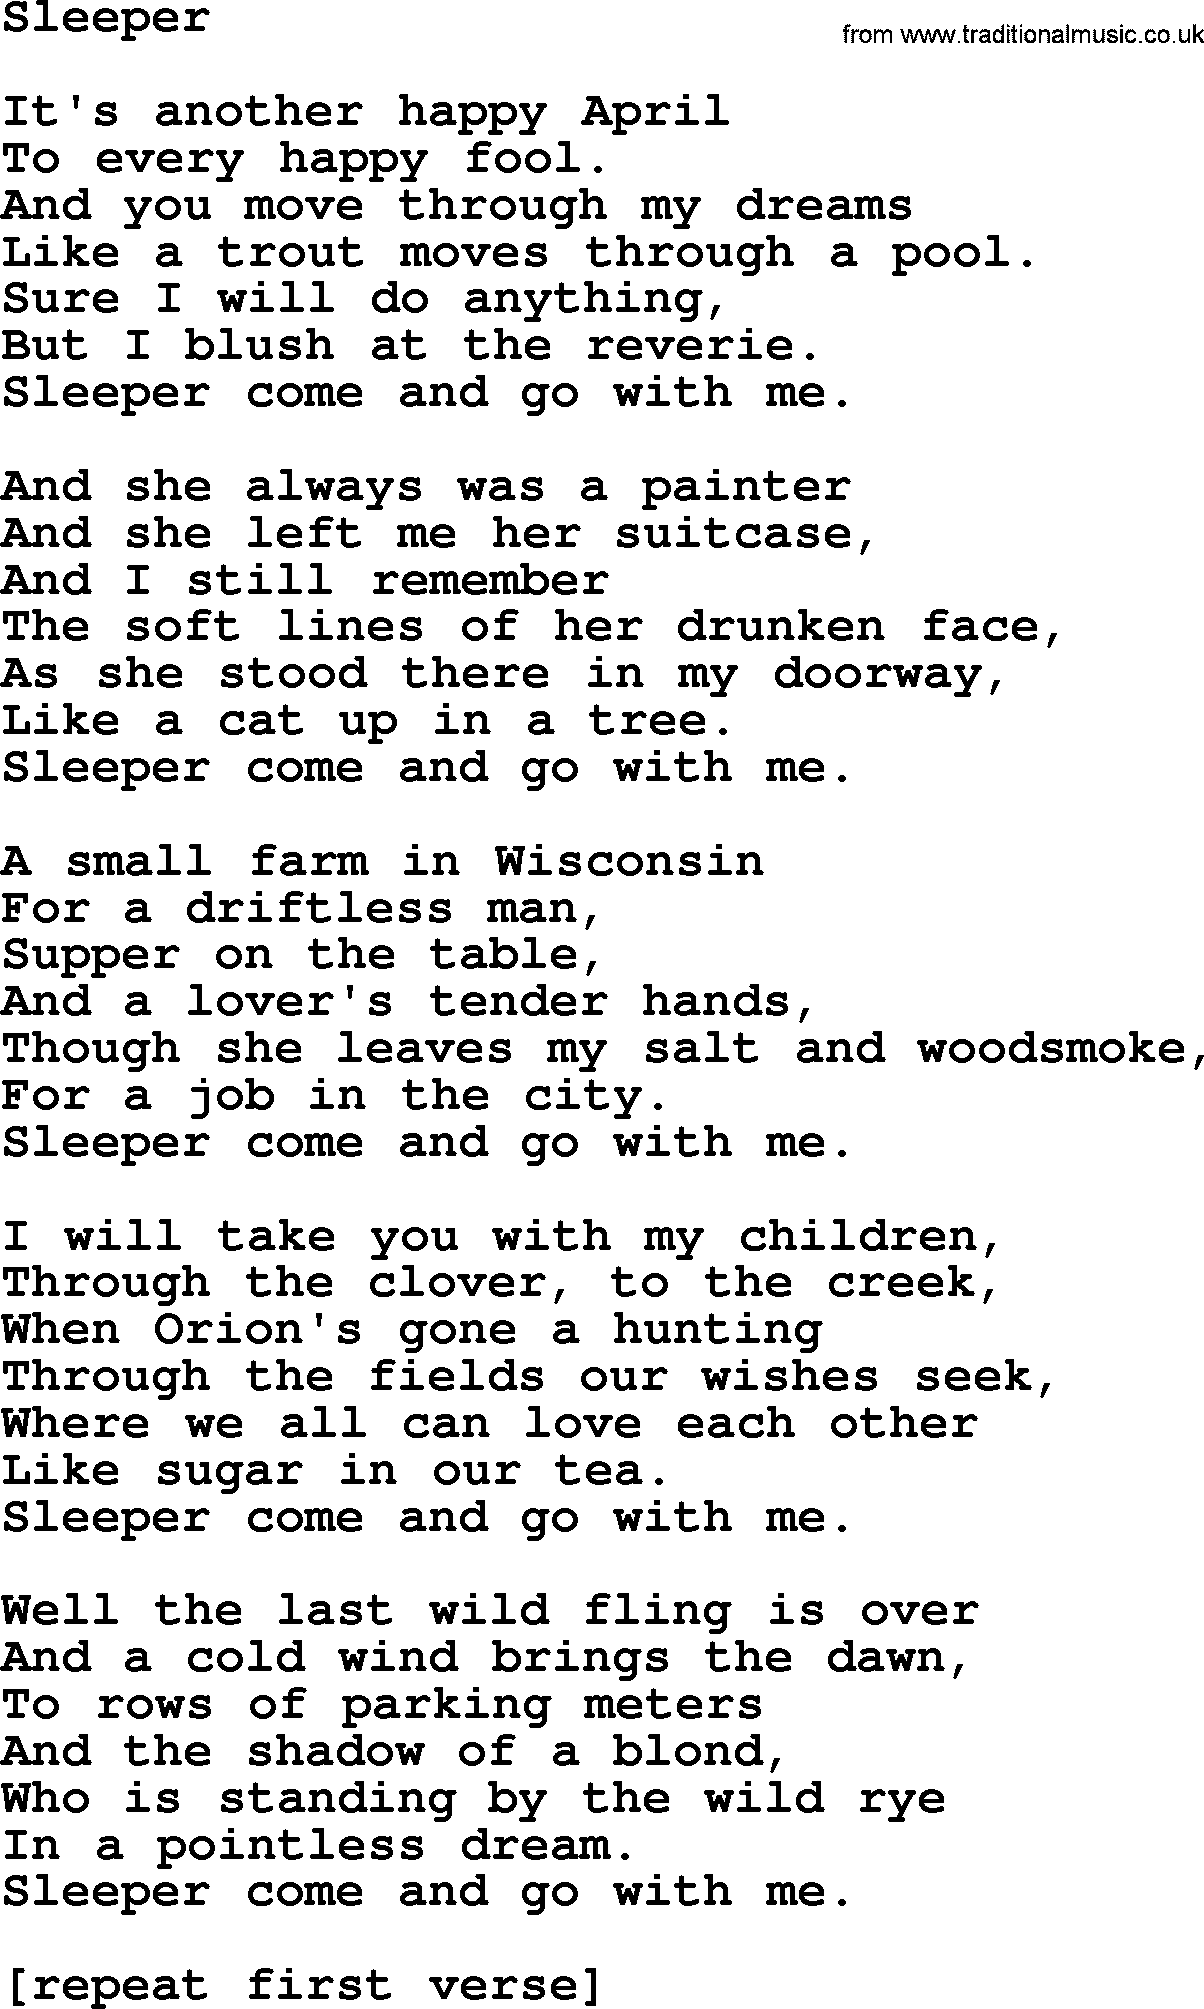 Joan Baez song Sleeper, lyrics